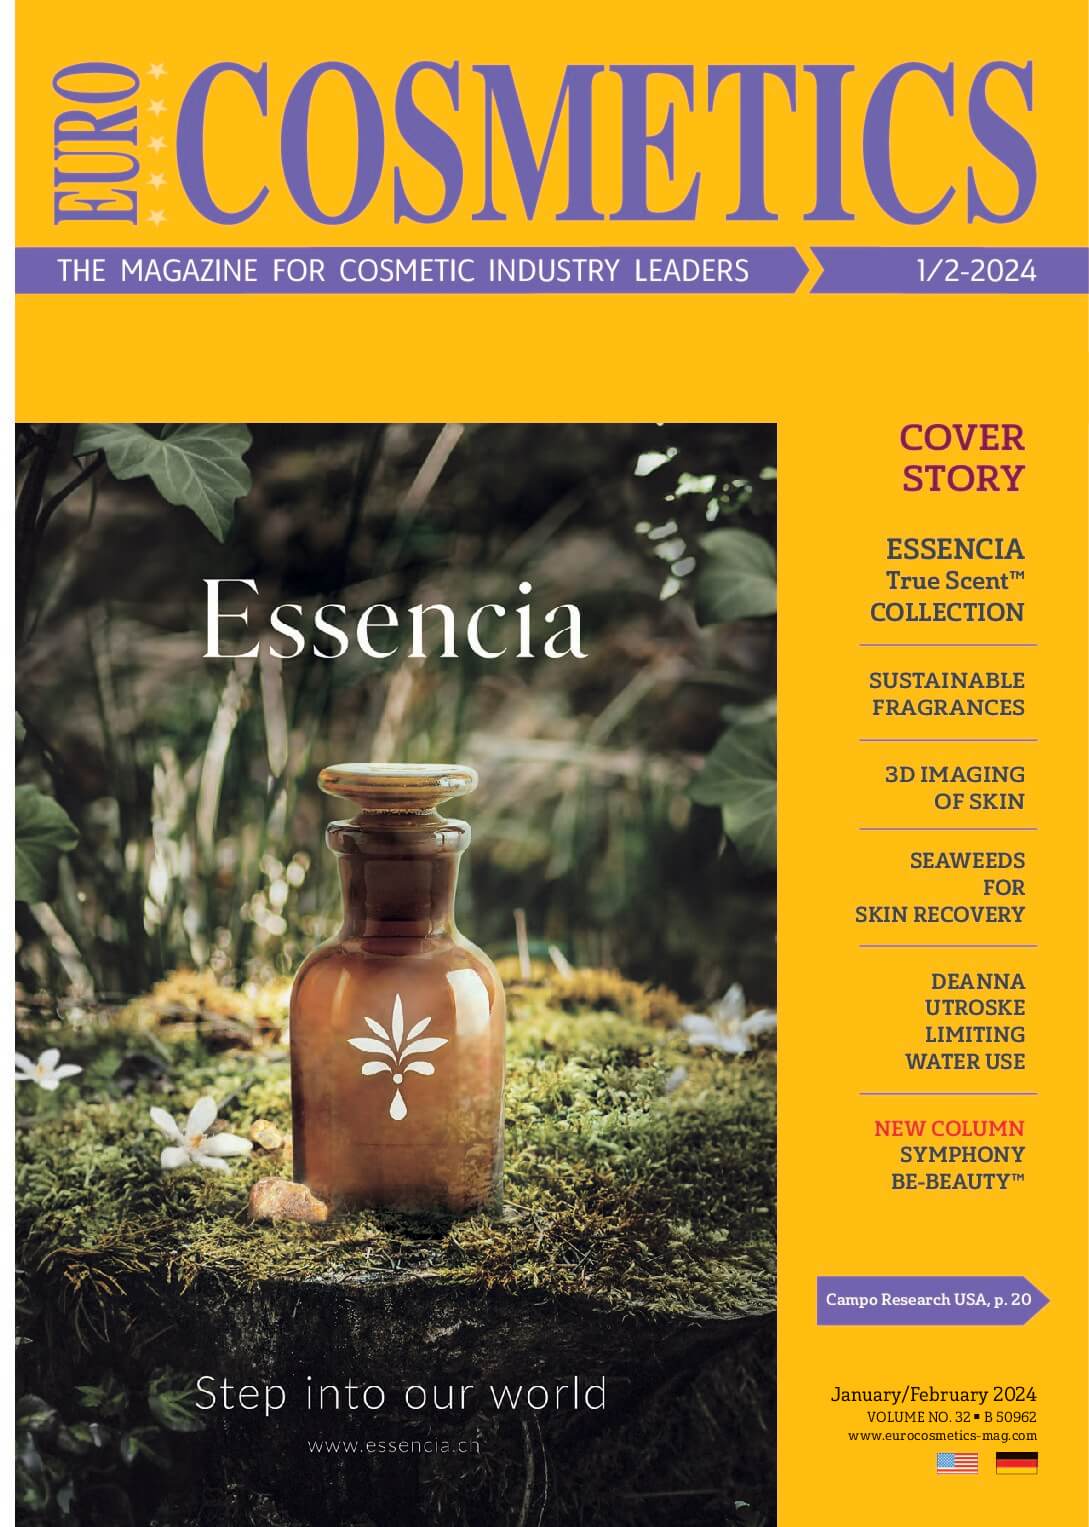 EURO COSMETICS Magazine • We Are Essencia • Essencia AG • Essencia AG